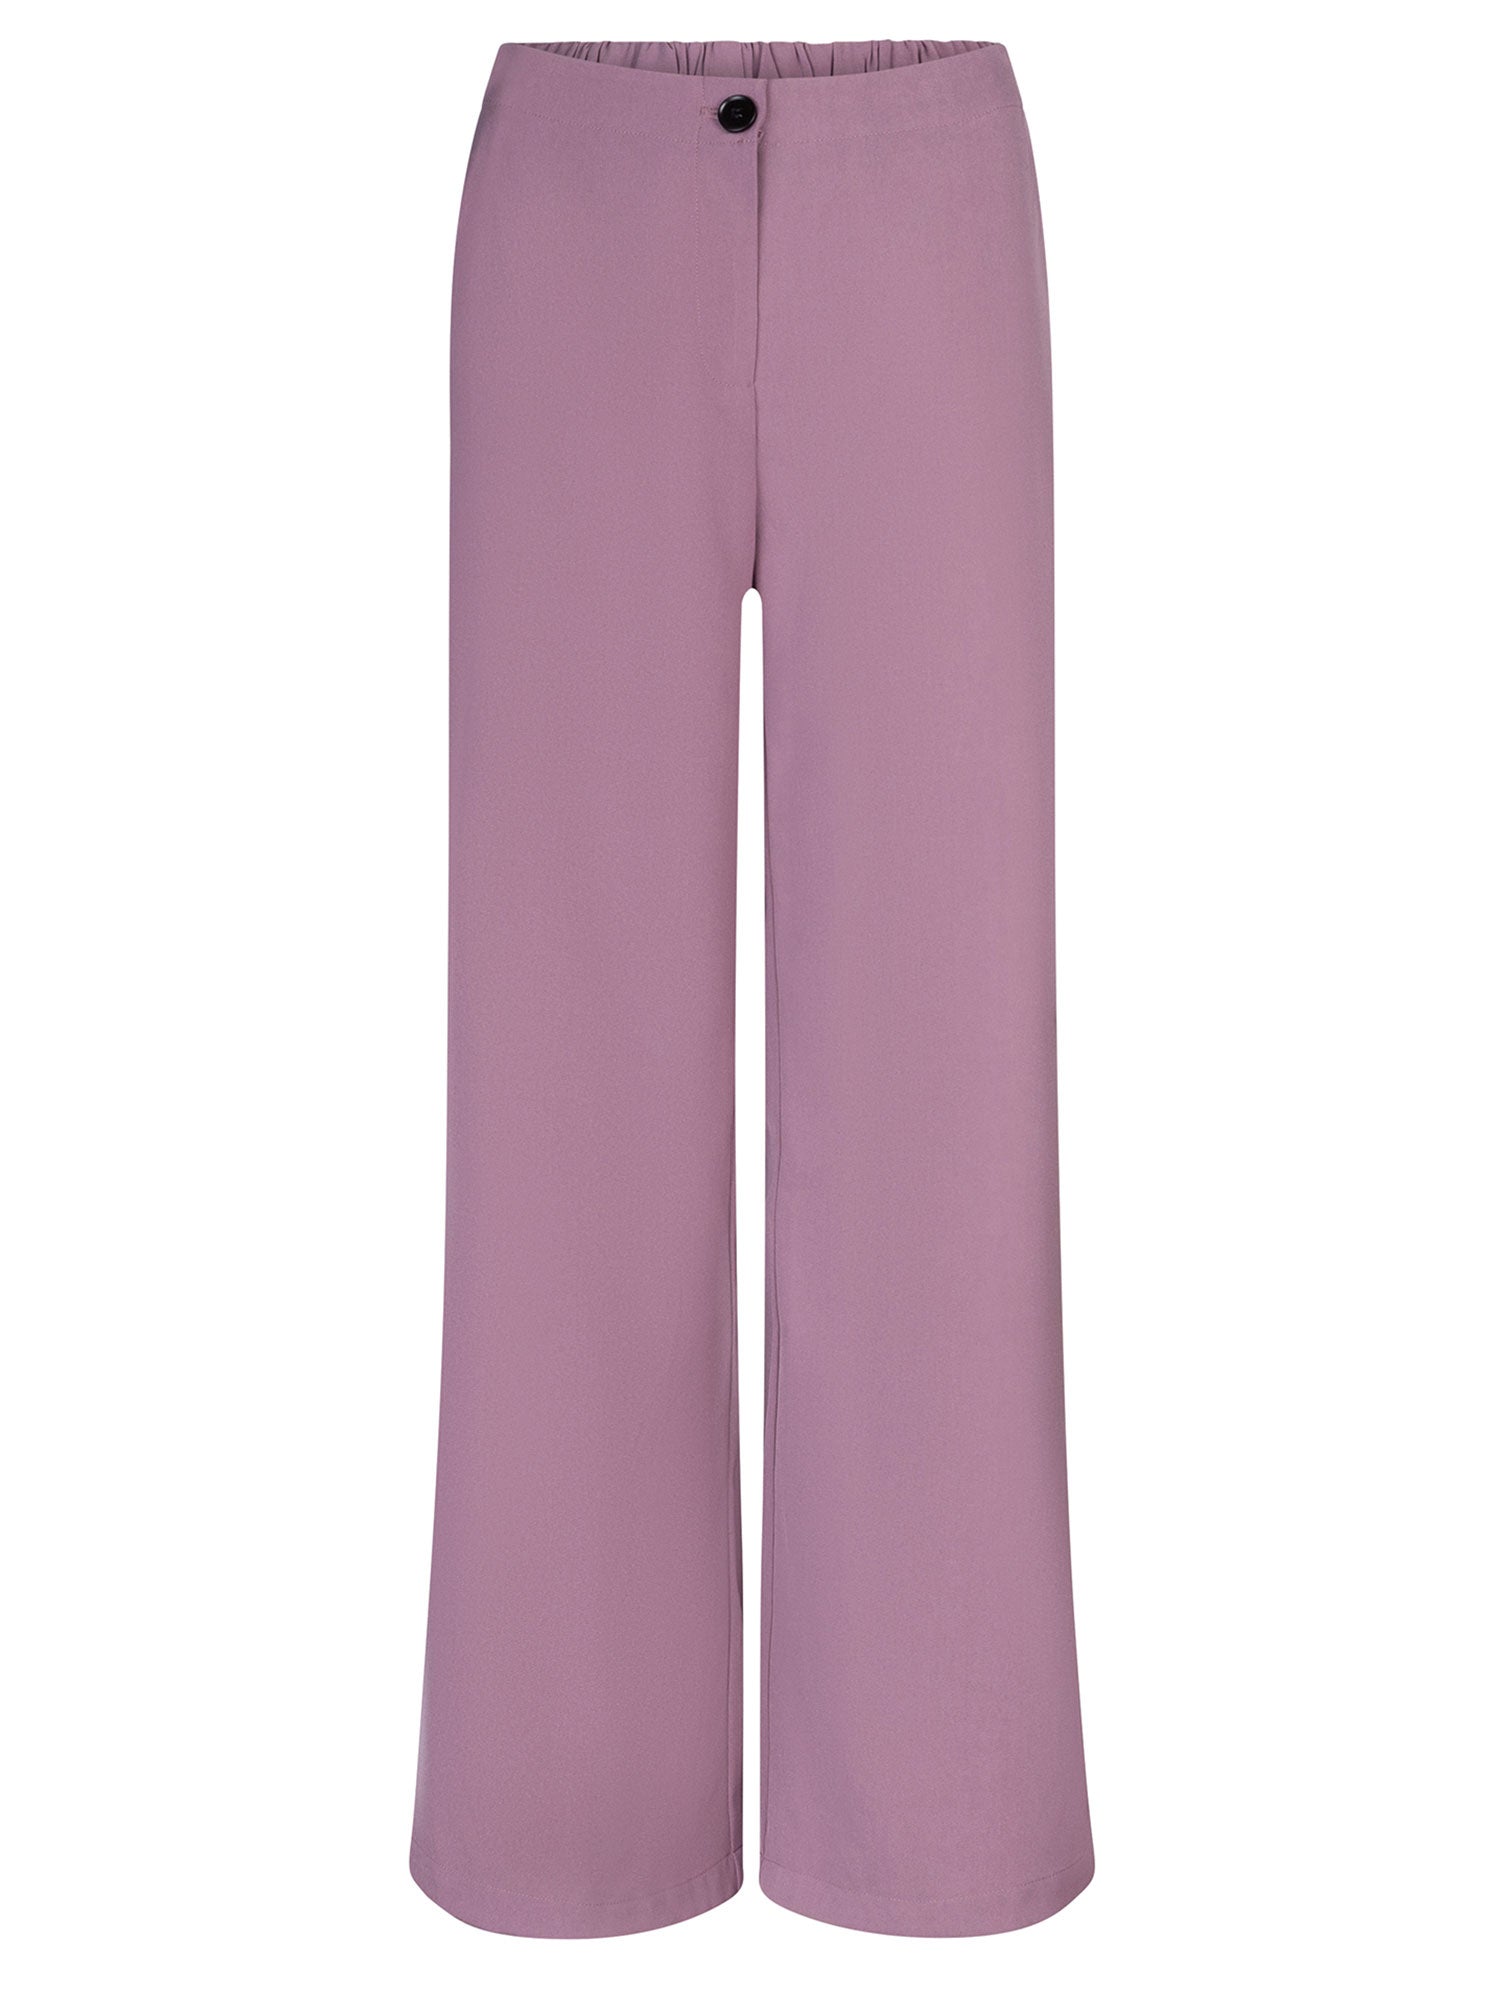 Ydence pantalon Solange soft purple